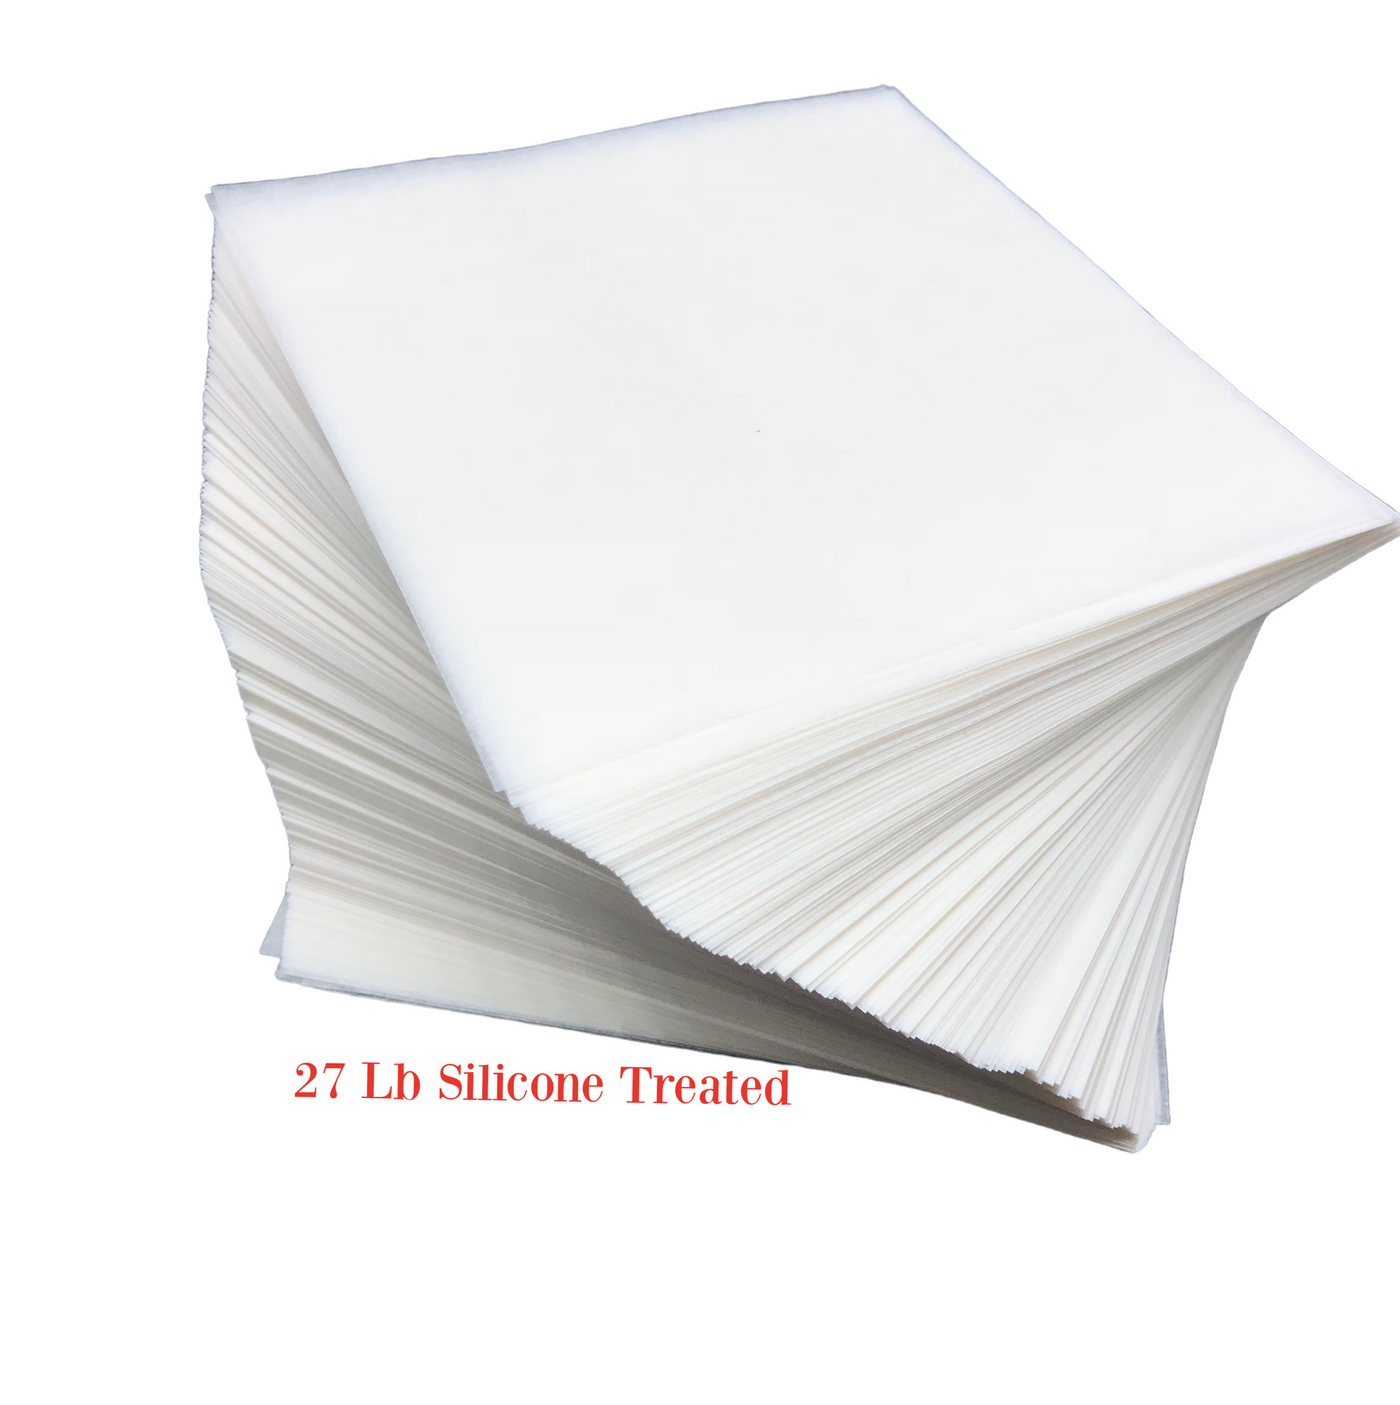 Precut Parchment Paper Squares, Baking Sheets (4 x 4 In, 1000